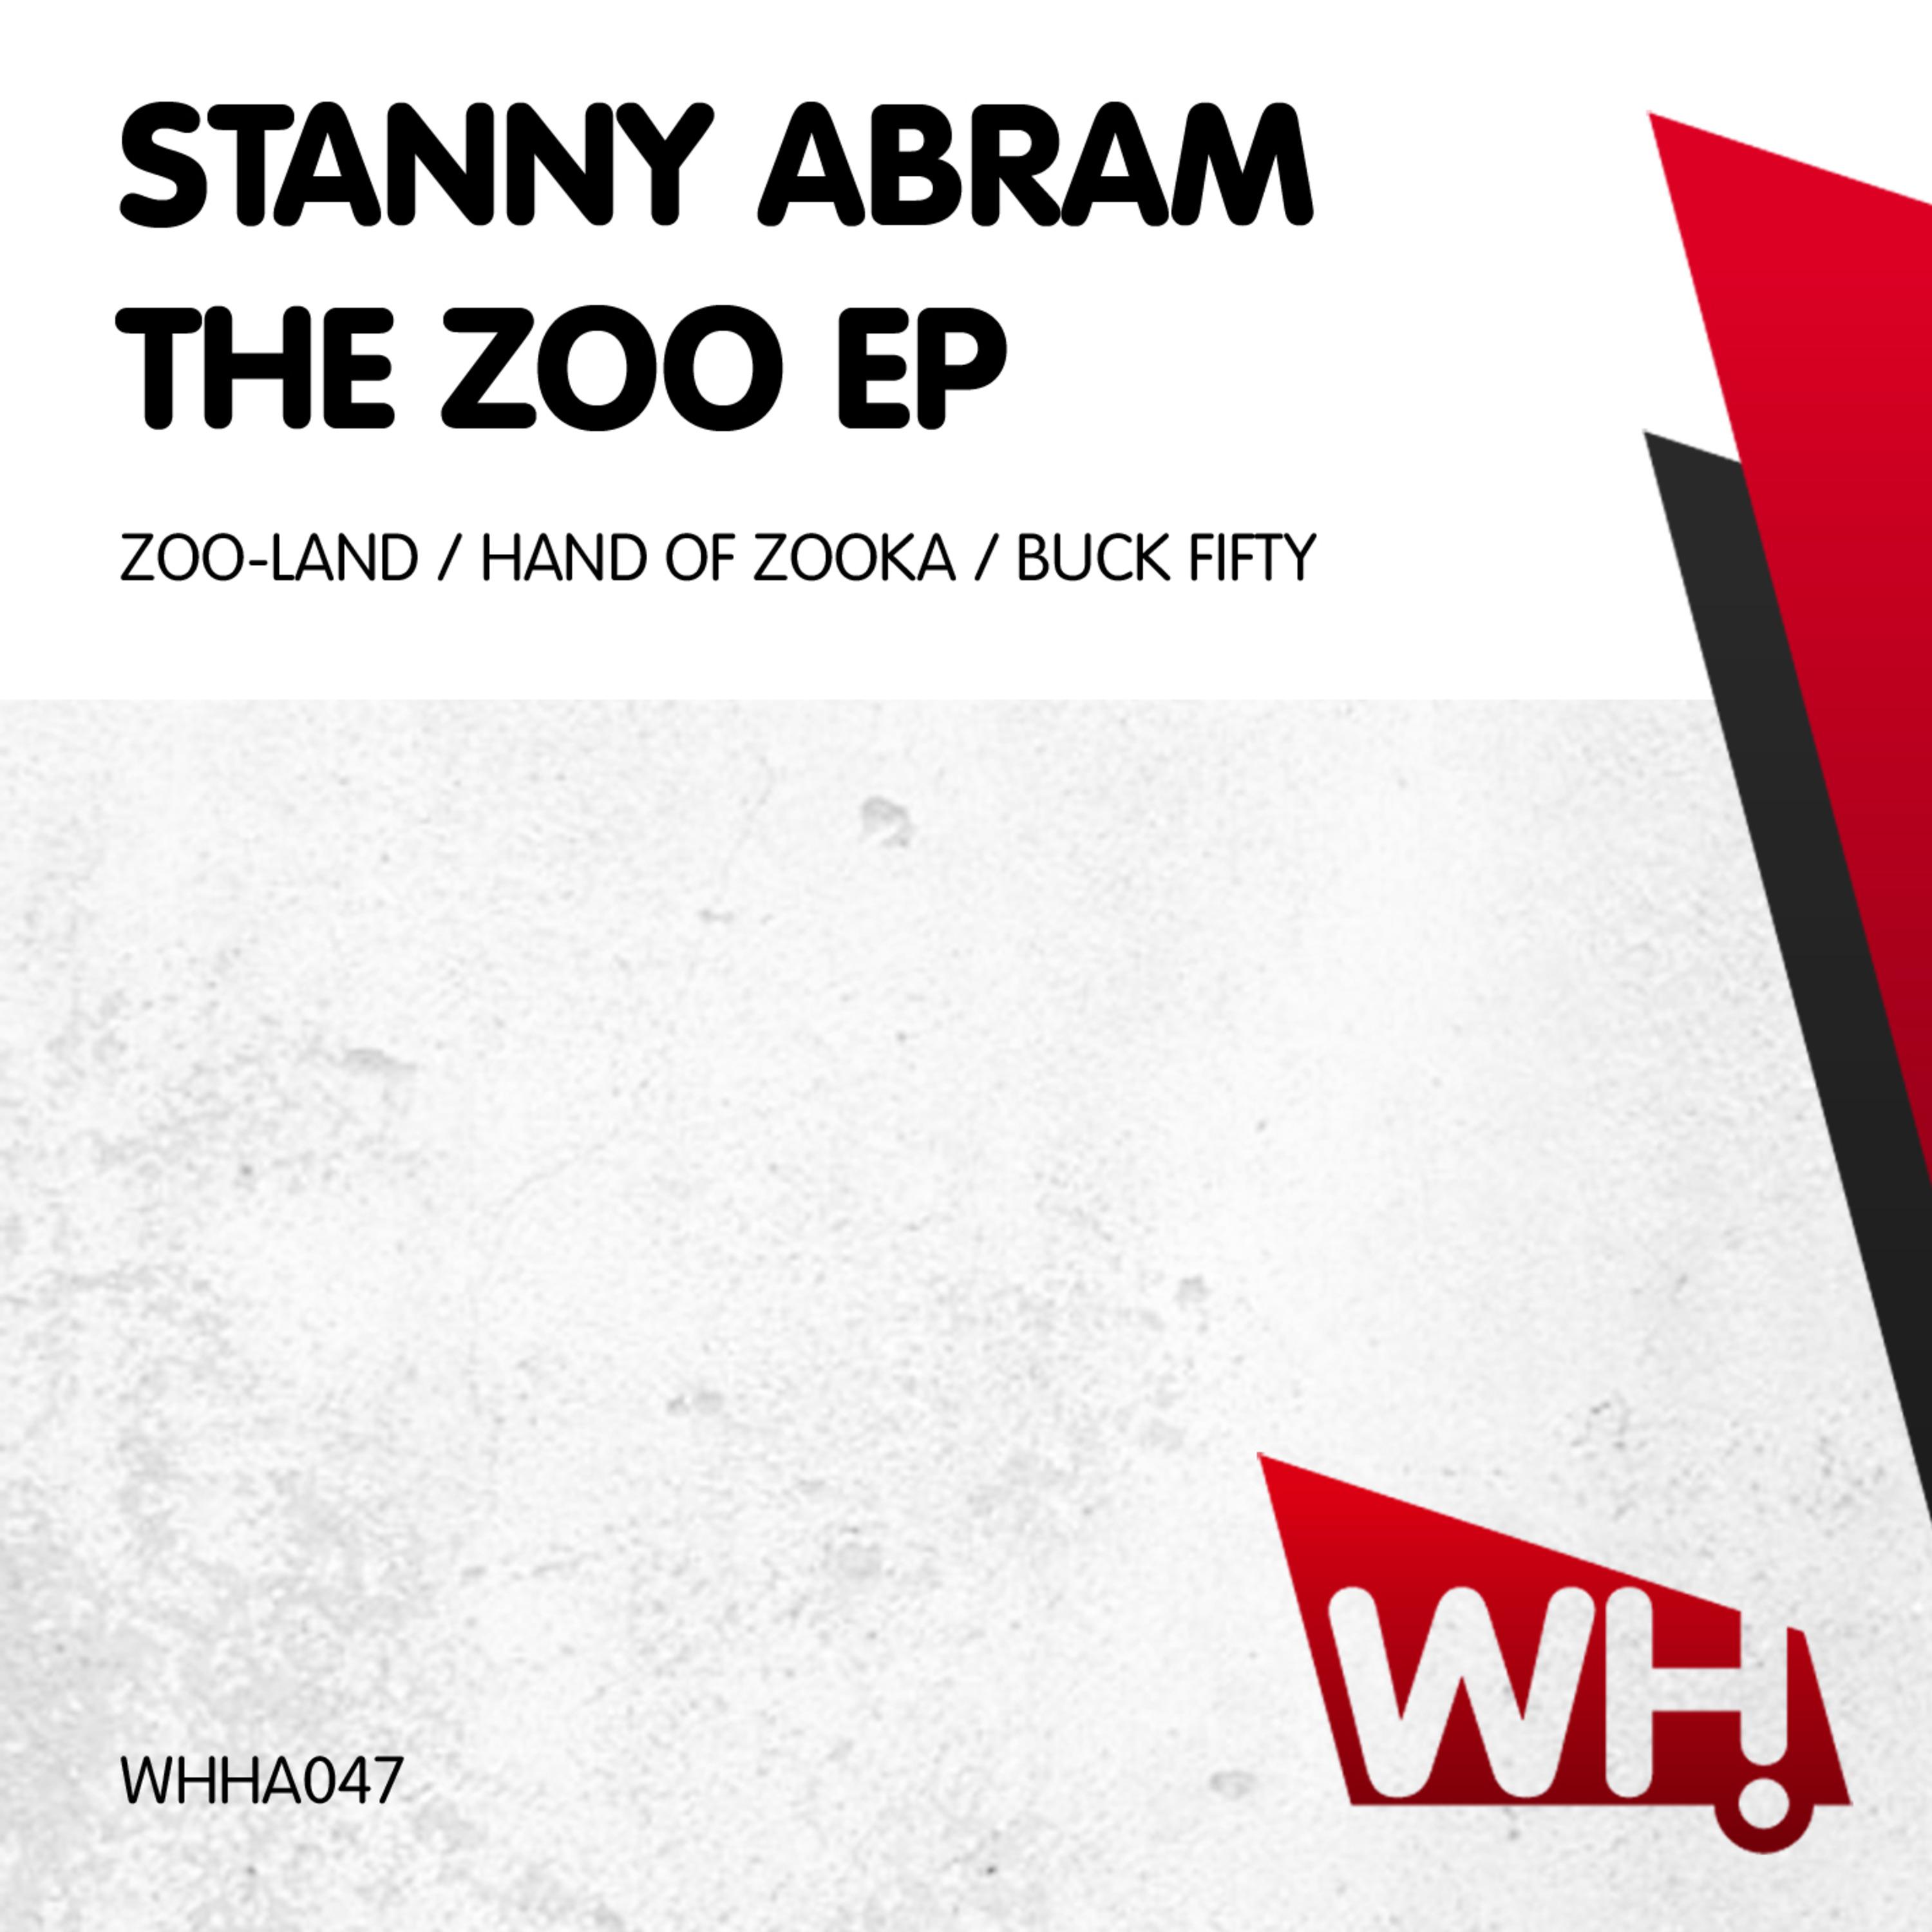 The Zoo EP